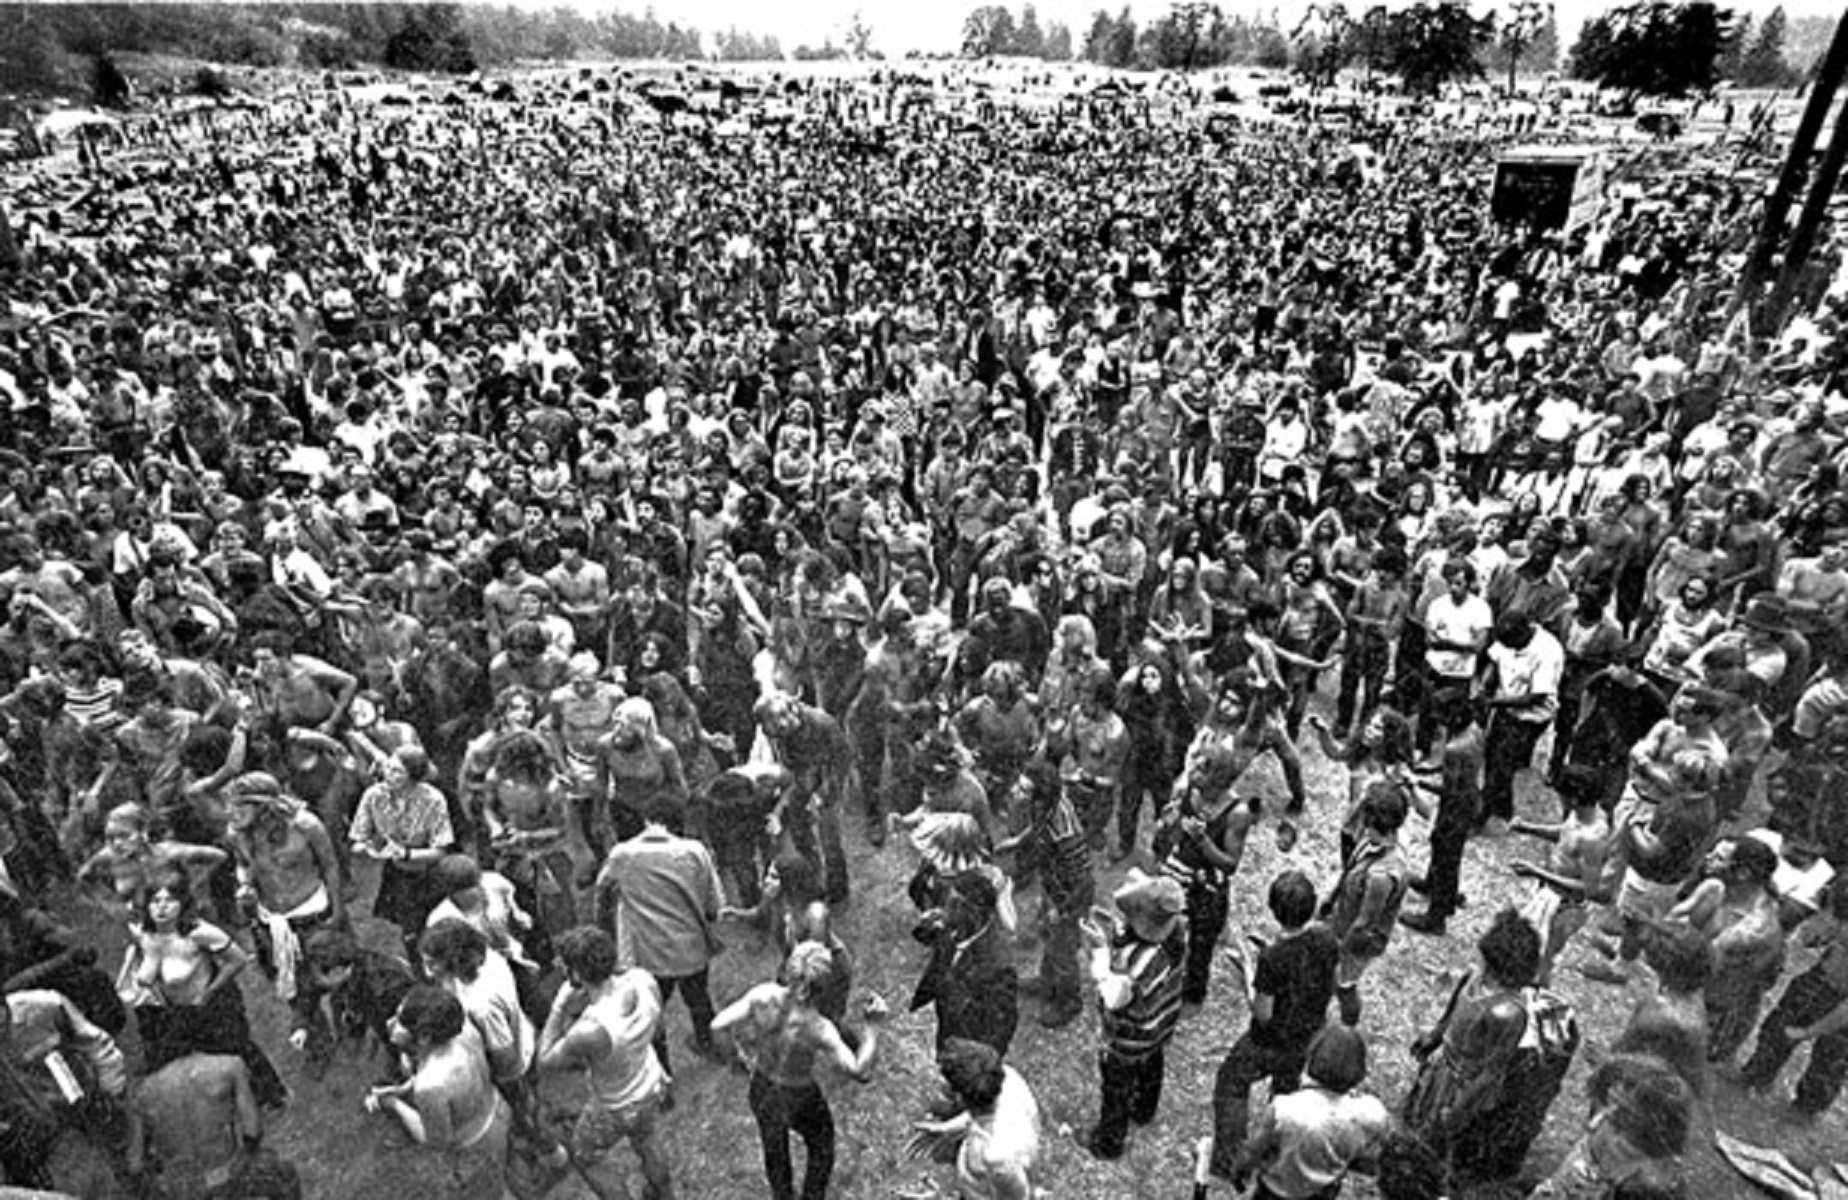 Vortex I Festival's Peak Crowd - 1970 - McIver State Park